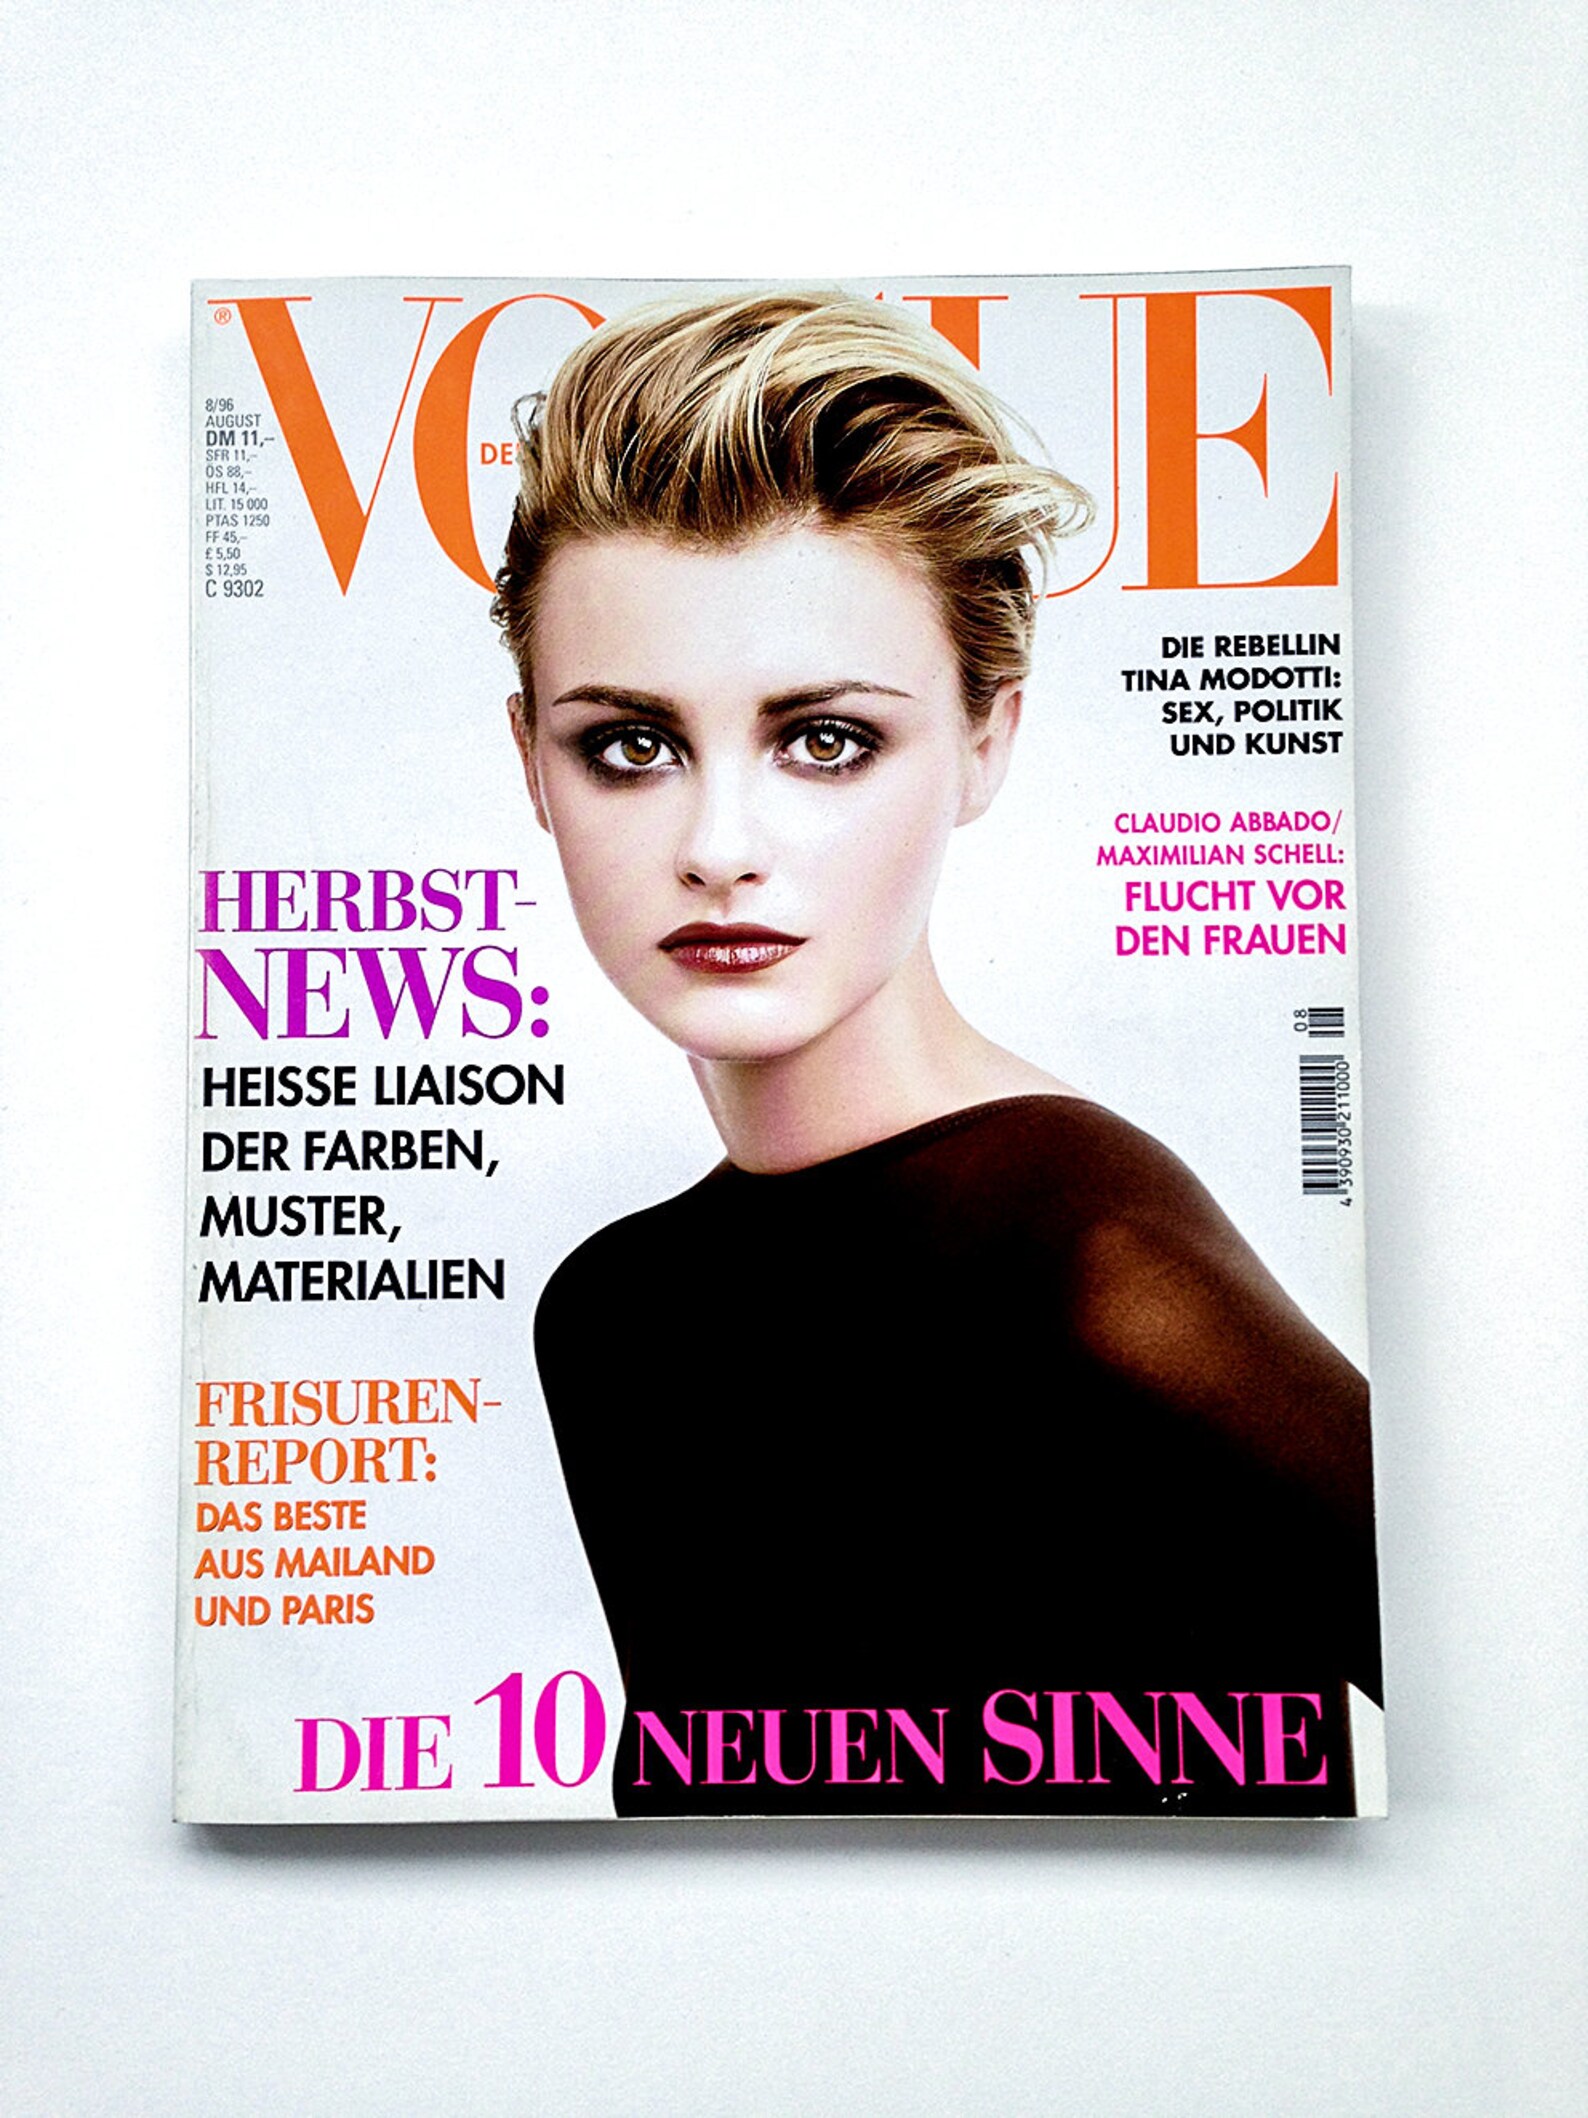 VOGUE german edition 8-1996 Vintage fashion magazine | Etsy